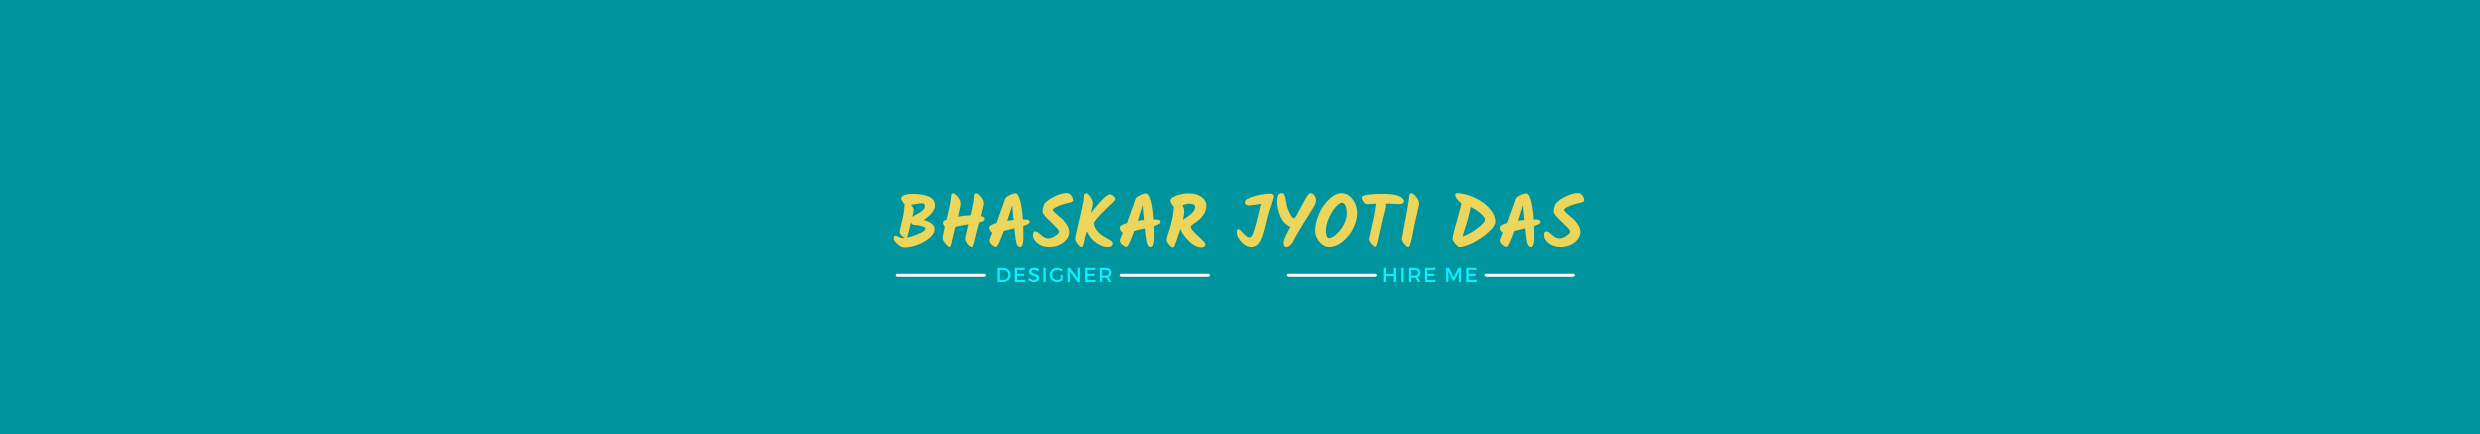 Bhaskar Jyoti Dass profilbanner